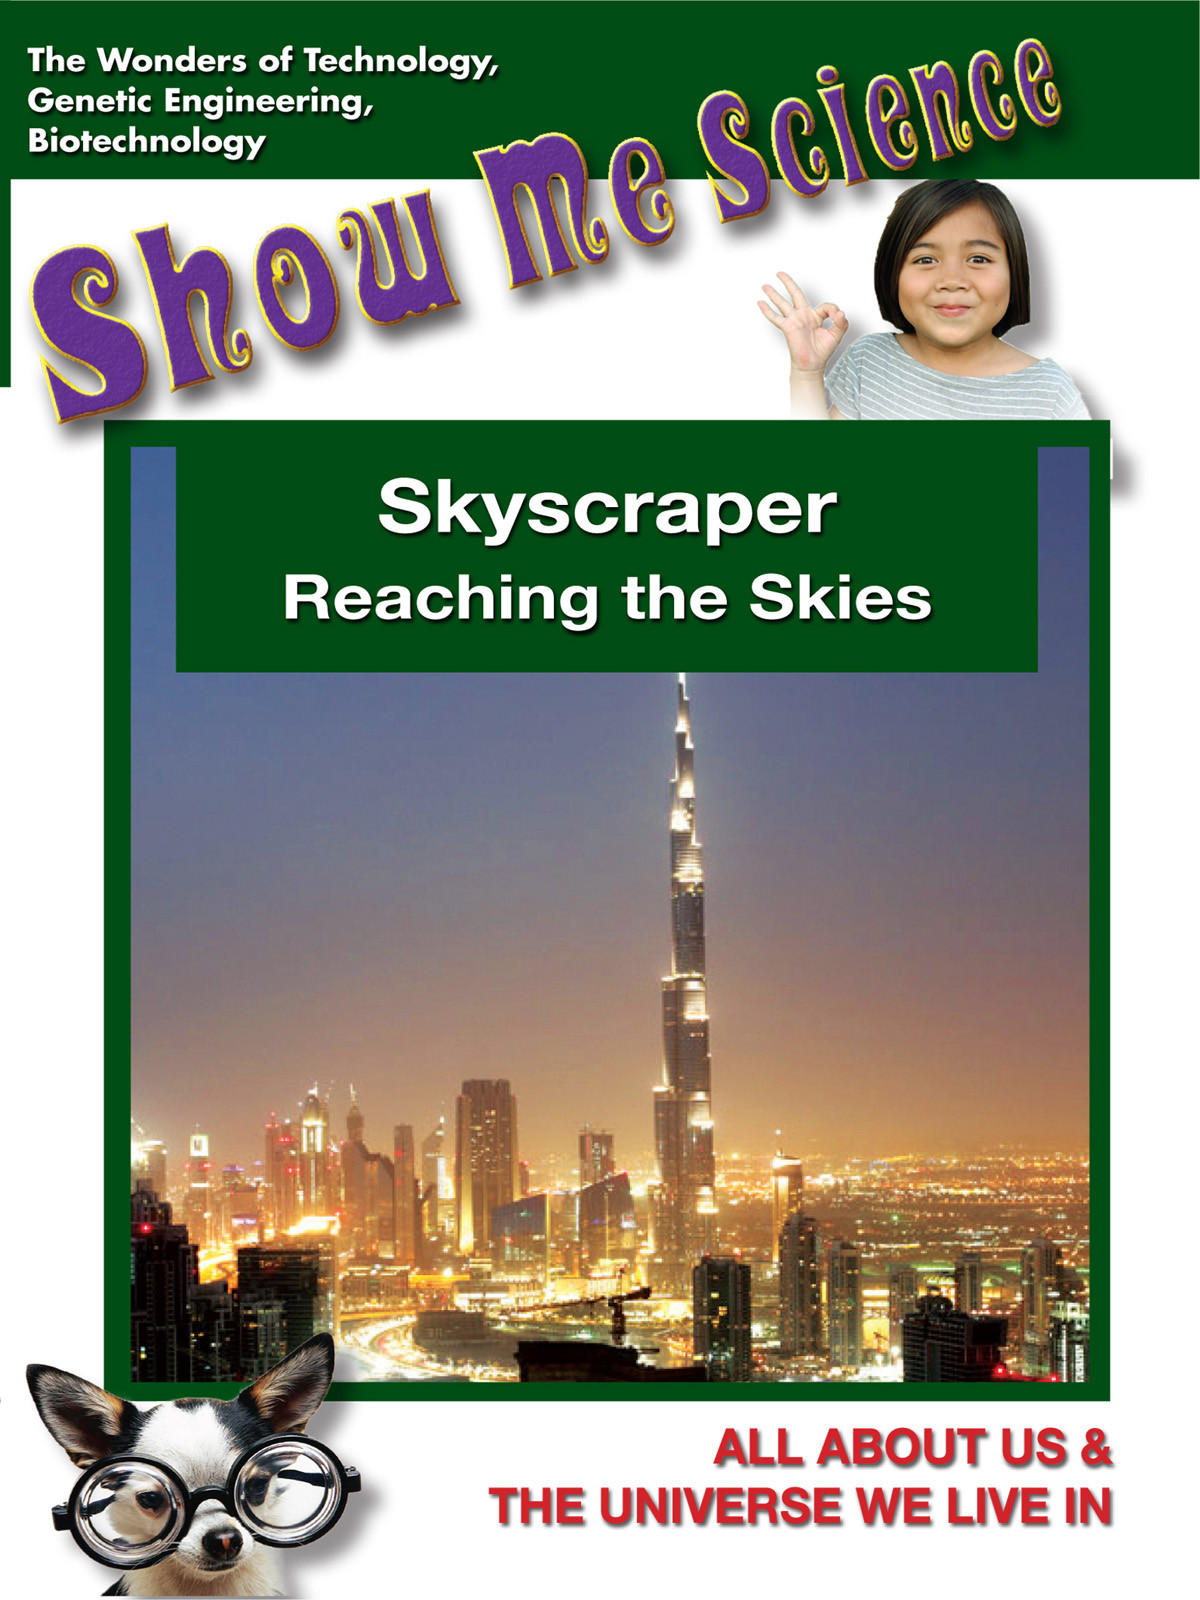 K4639 - Skyscraper  Reaching the Skies